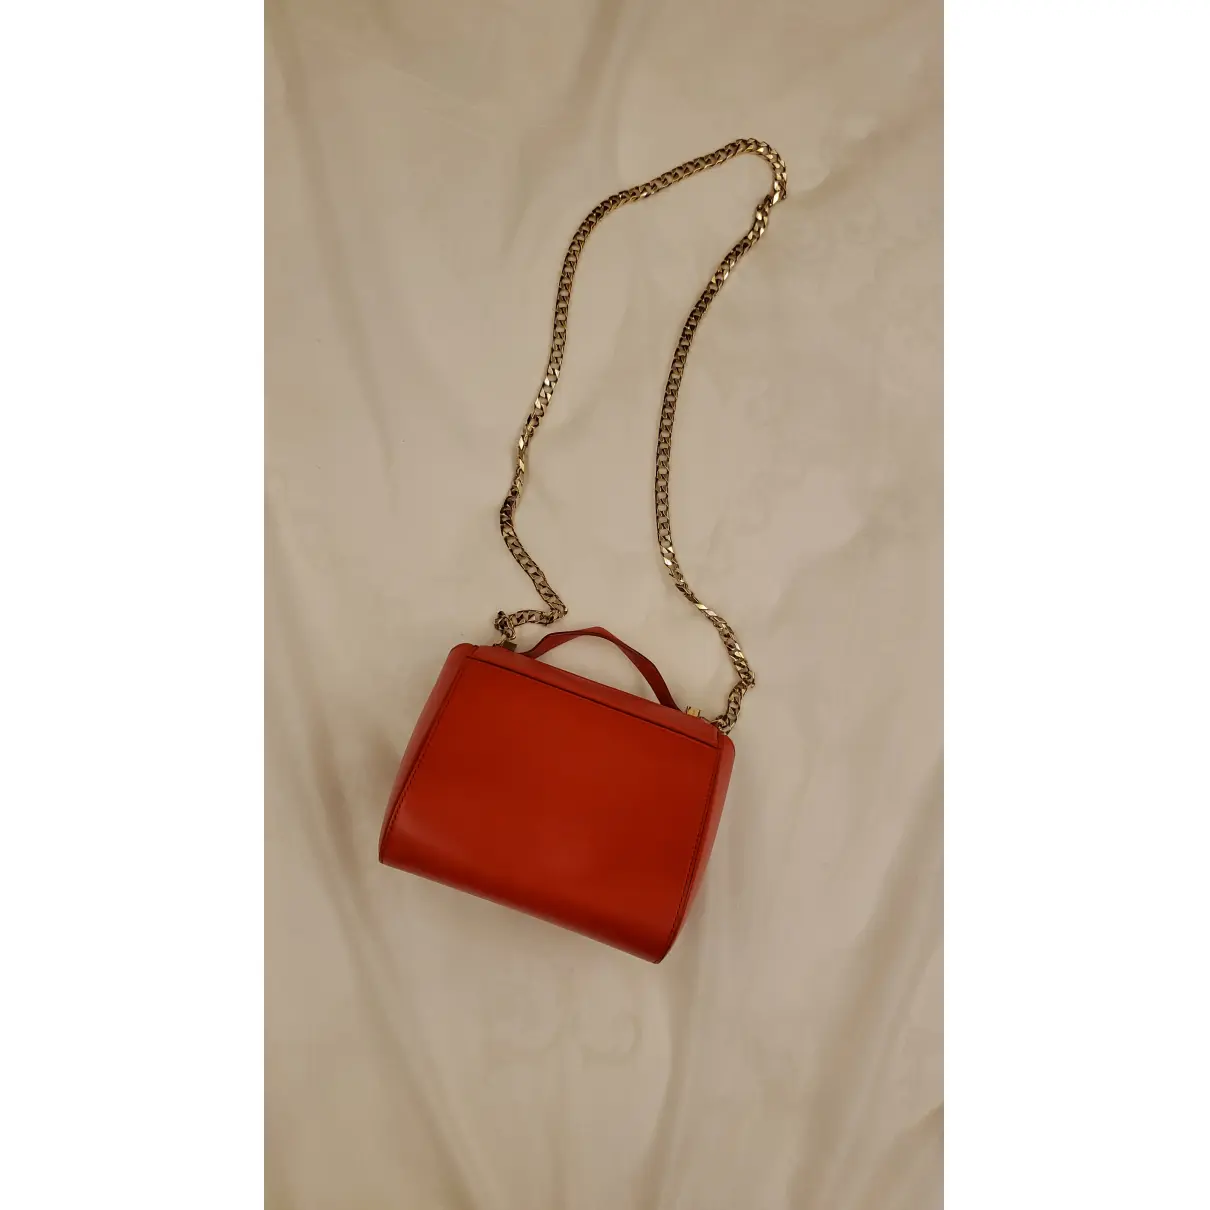 Buy Givenchy Pandora Box leather handbag online